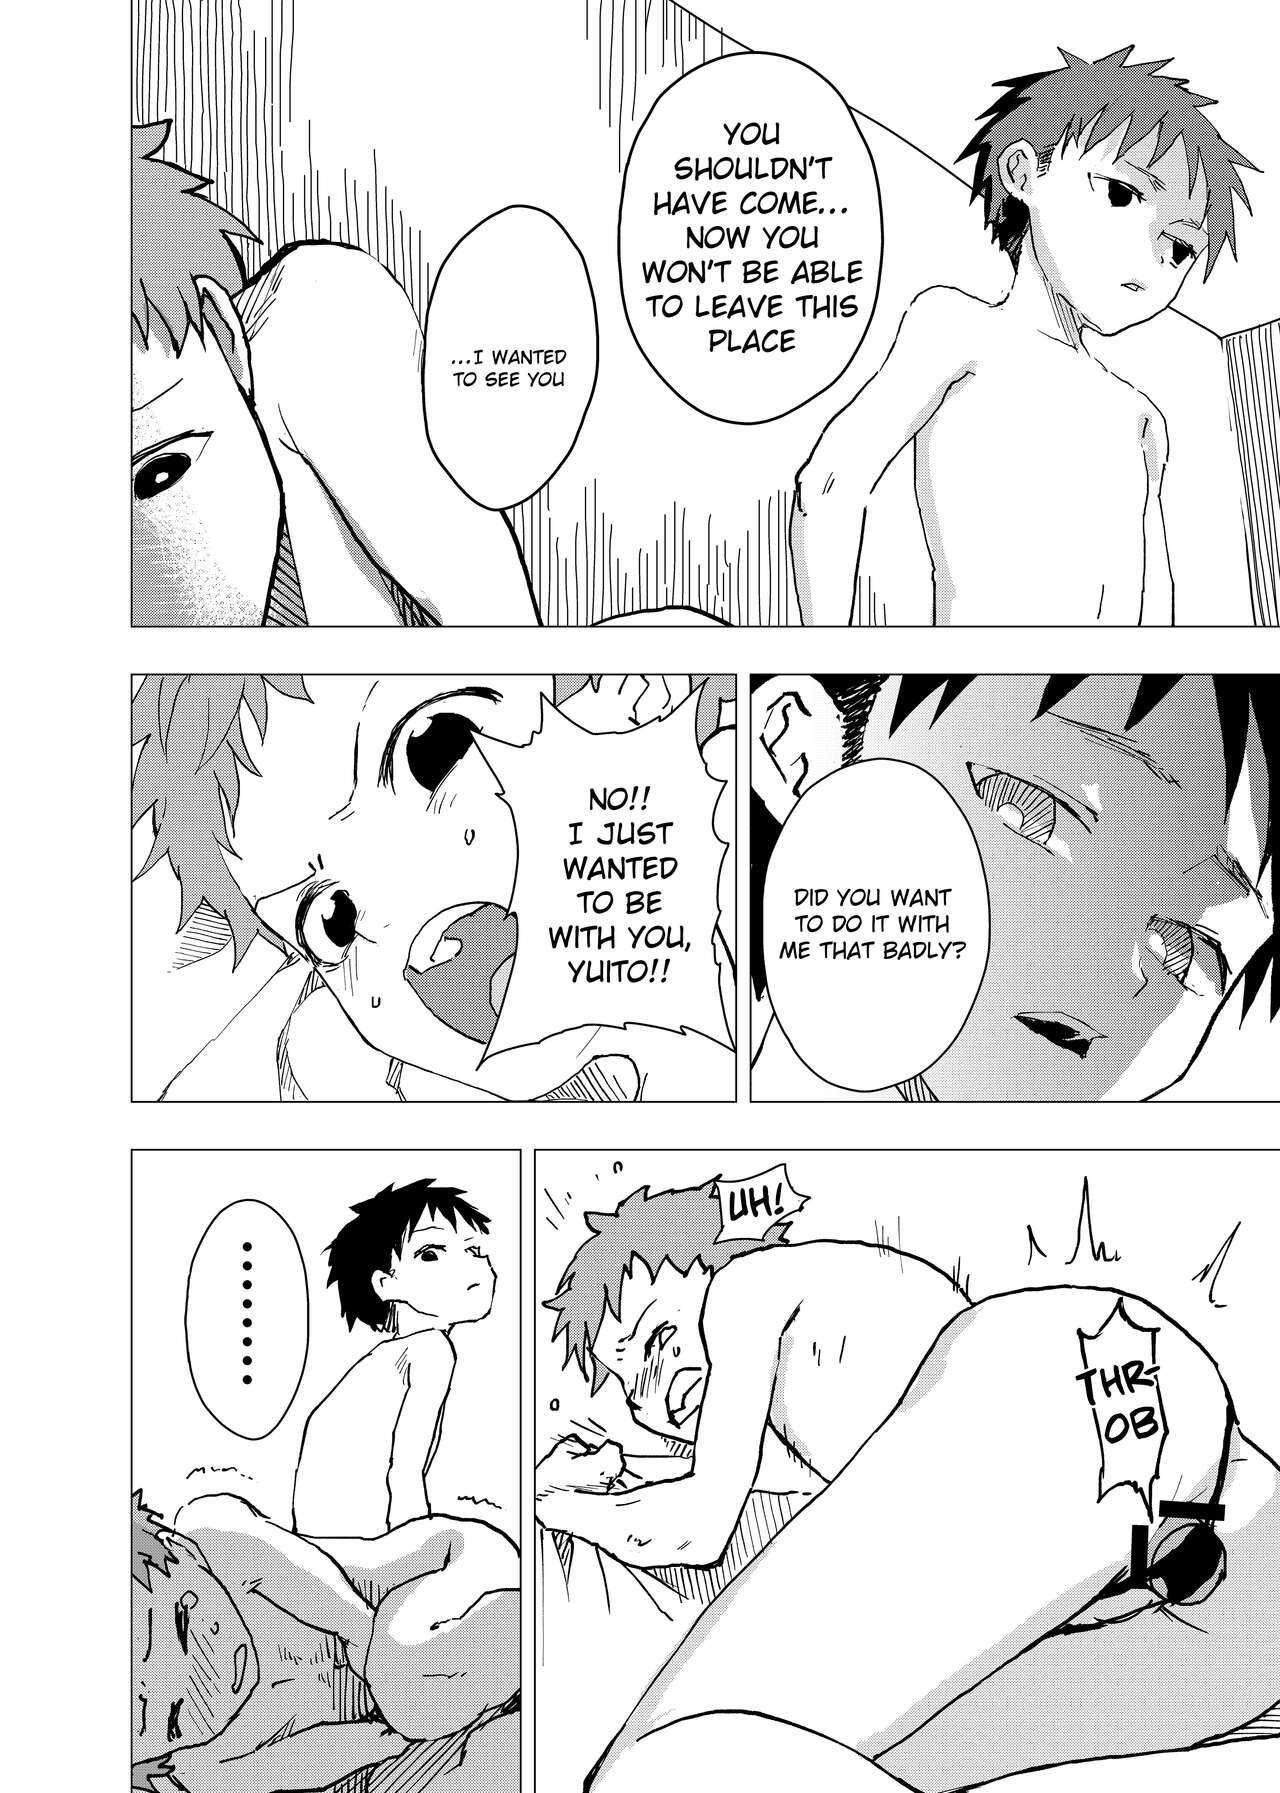 Ibasho ga Nai node Kamimachi shite mita Suterareta Shounen no Ero Manga Ch. 8 | A Dirty Manga About a Boy Who Got Abandoned and Is Waiting for Someone To Save Him Ch. 8 21